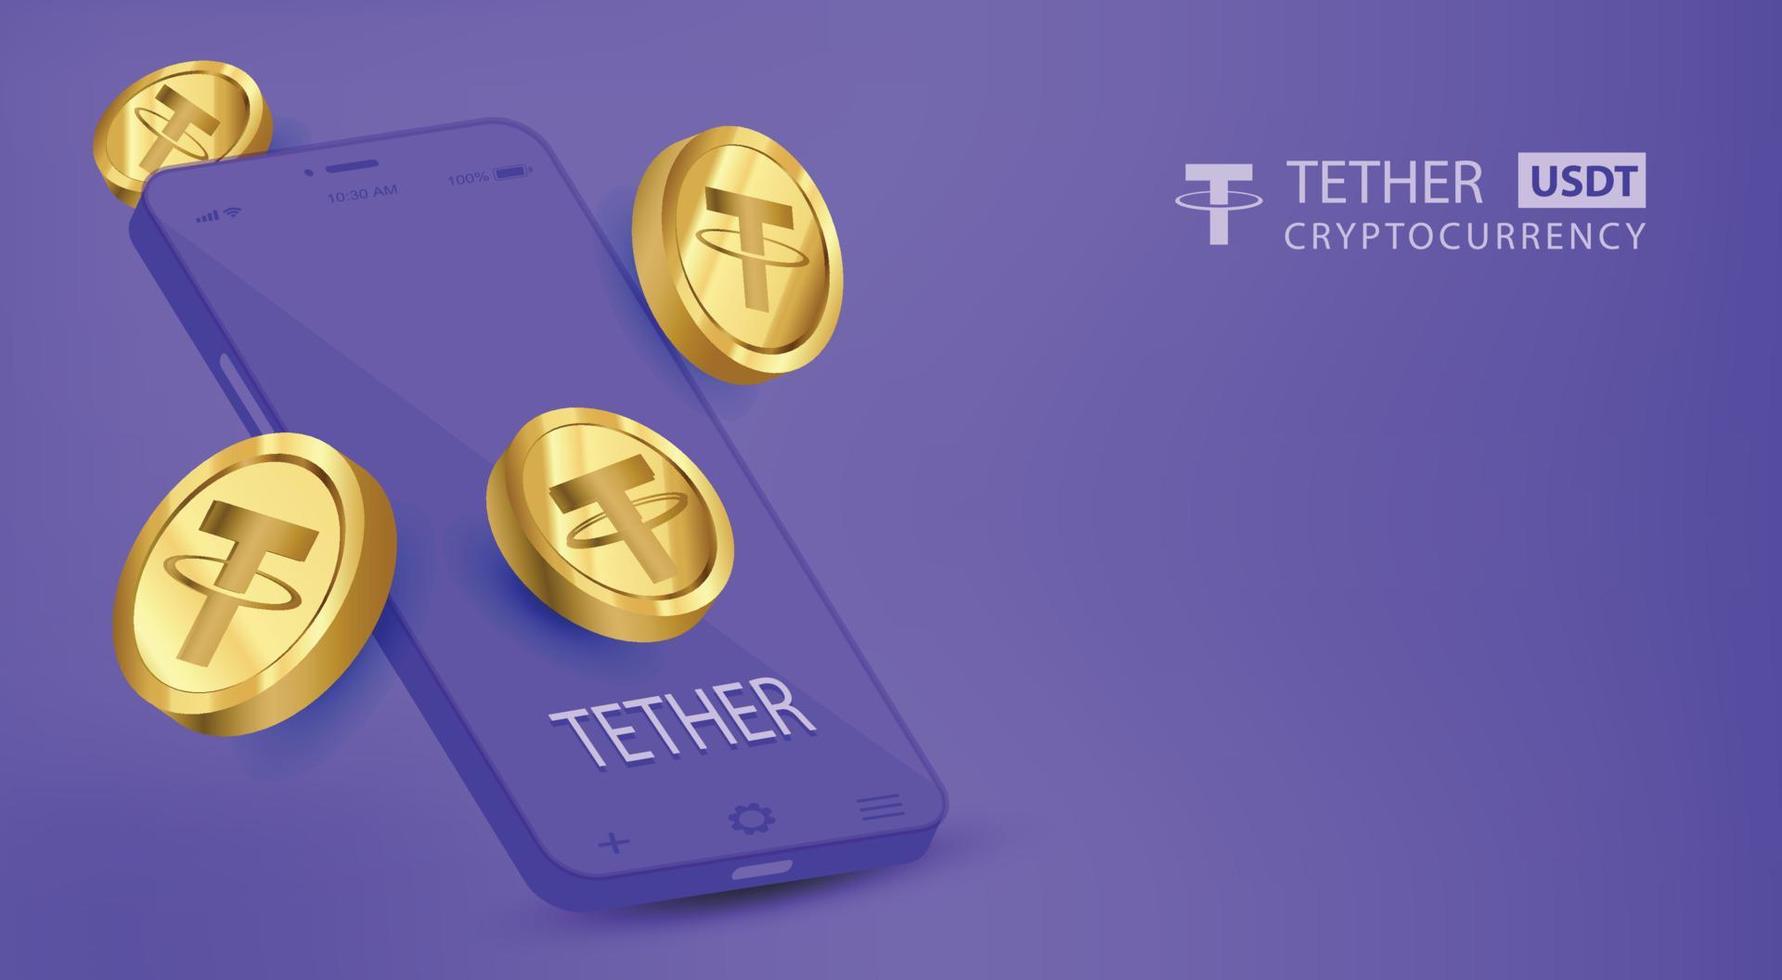 Tether USDT cryptocurrency technology vector illustration background